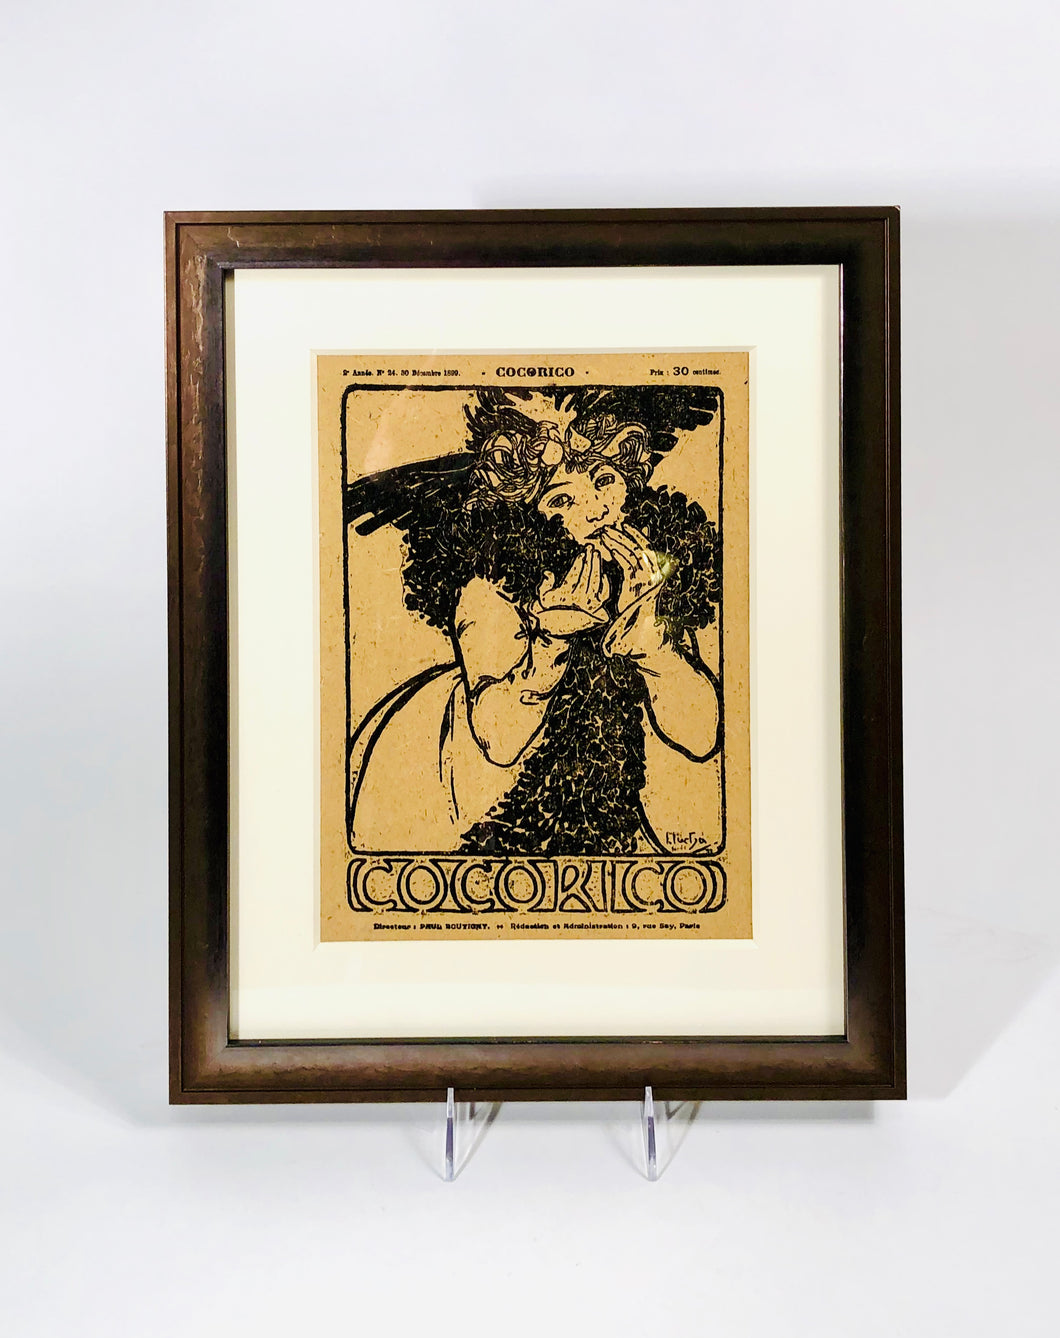 1899 COCORICO Framed Magazine Cover, Alphonse Mucha, Wood Block Print